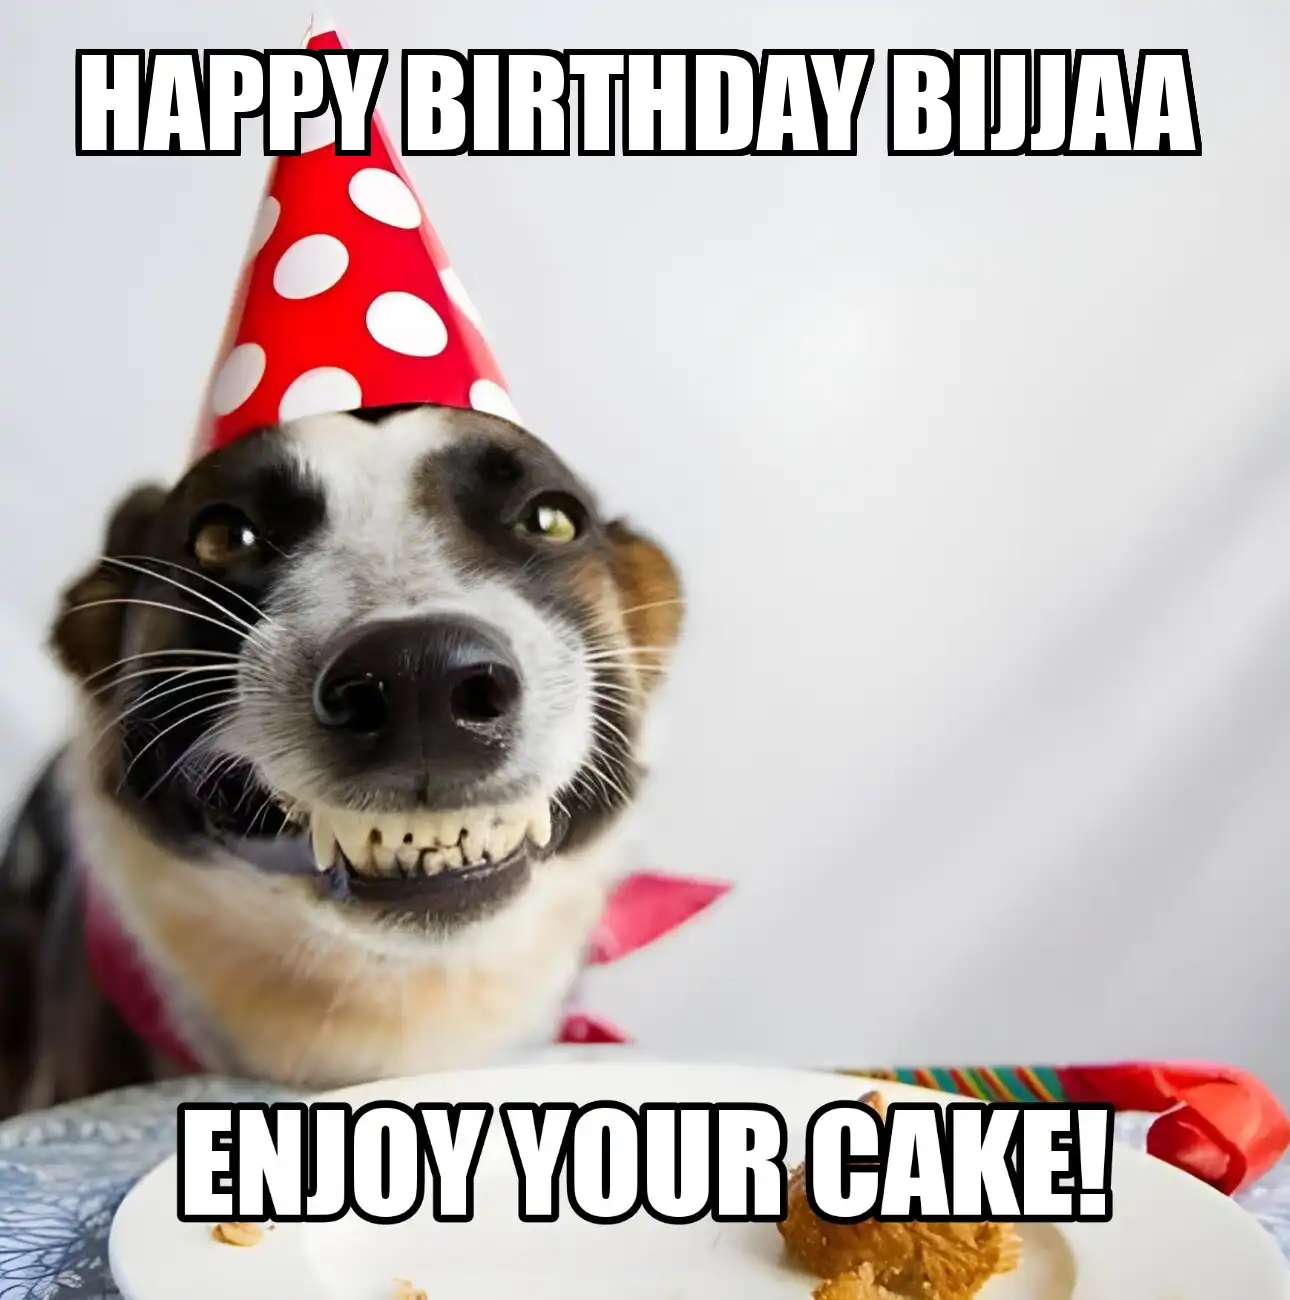 Happy Birthday Bijjaa Enjoy Your Cake Dog Meme